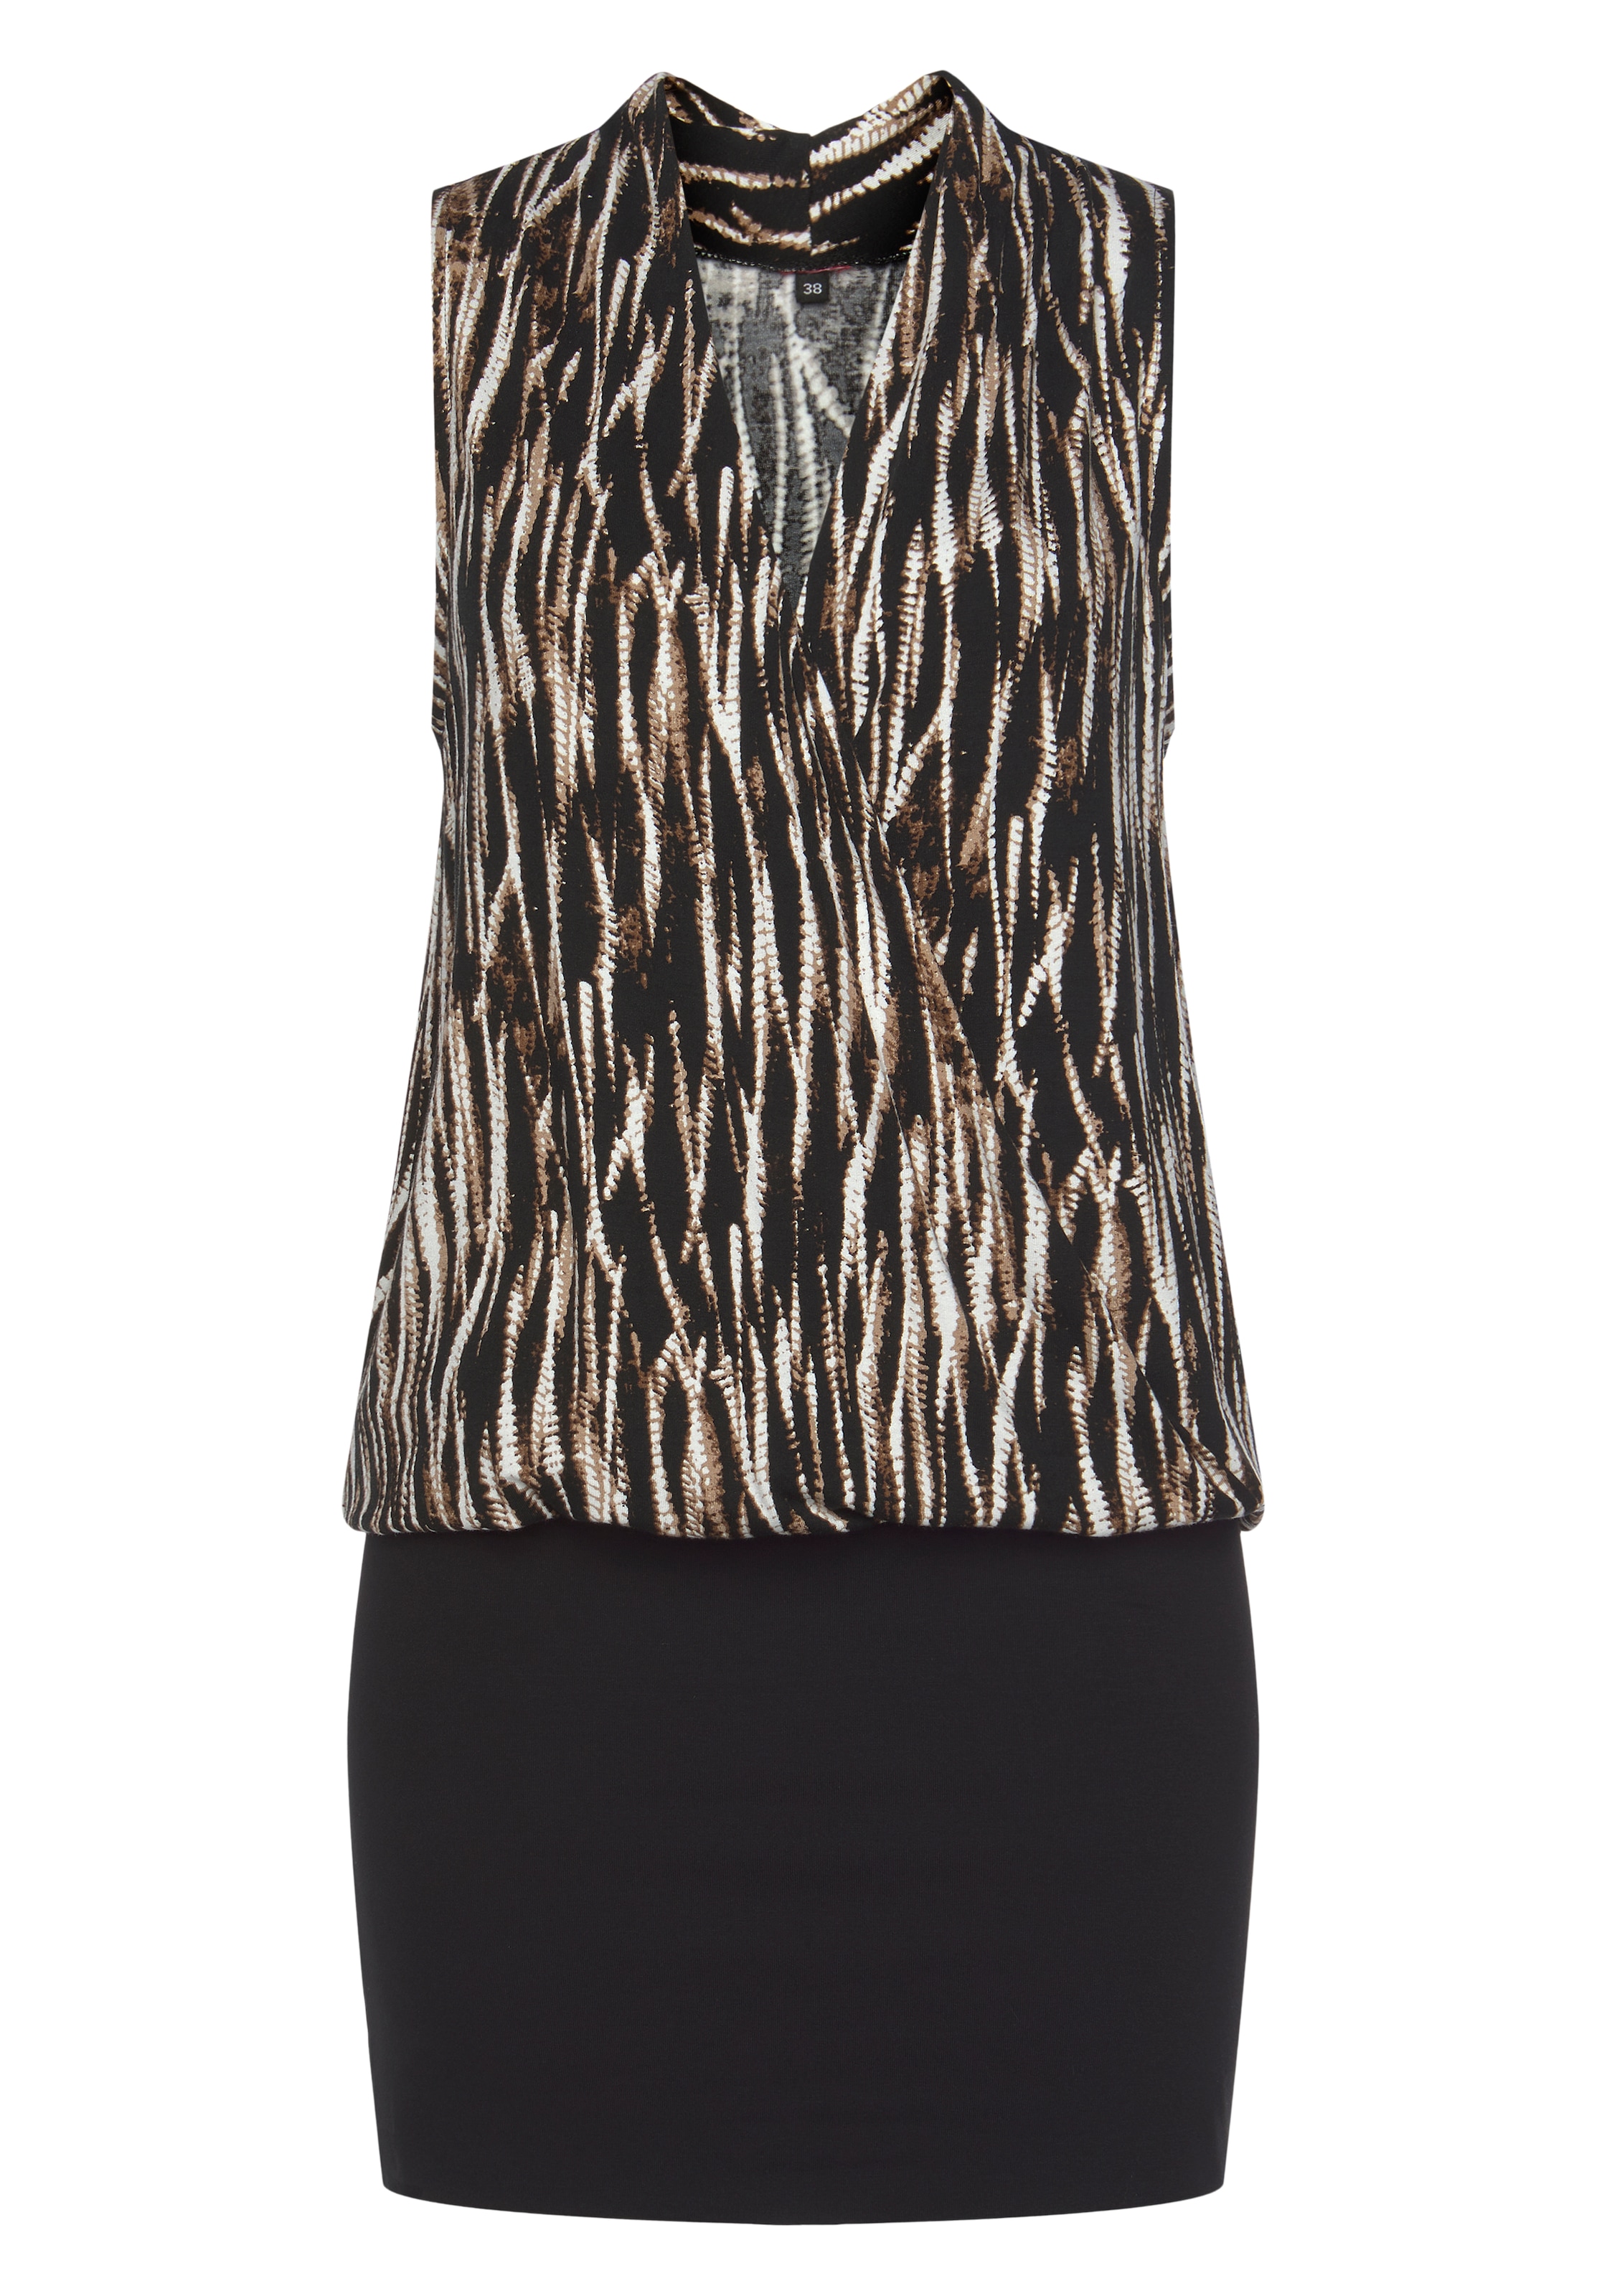 Vivance Minikleid, mit bedrucktem Oberteil, elegantes Blusenkleid, Sommerkleid